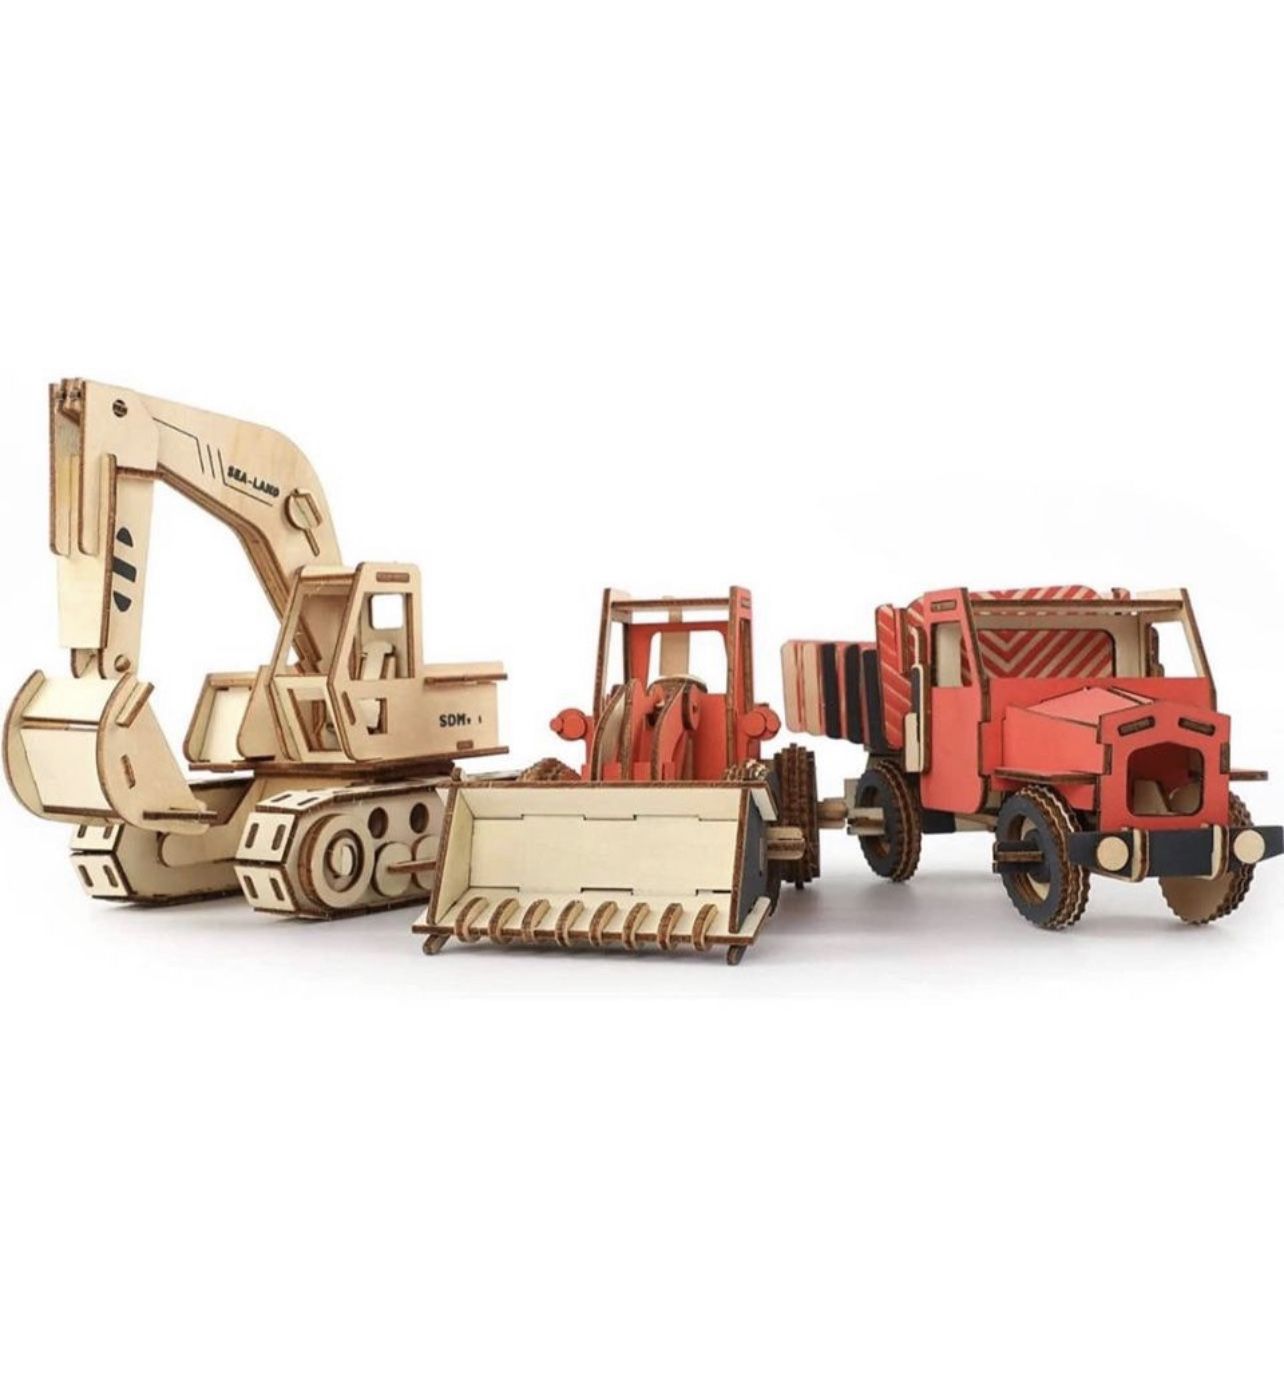 Brandnew  3 Construction Vehicle 3D Wooden Puzzles - Excavator Dump Truck Wheel Loader, Mechanical Building Models, Craft Kits for Adults Men Teens